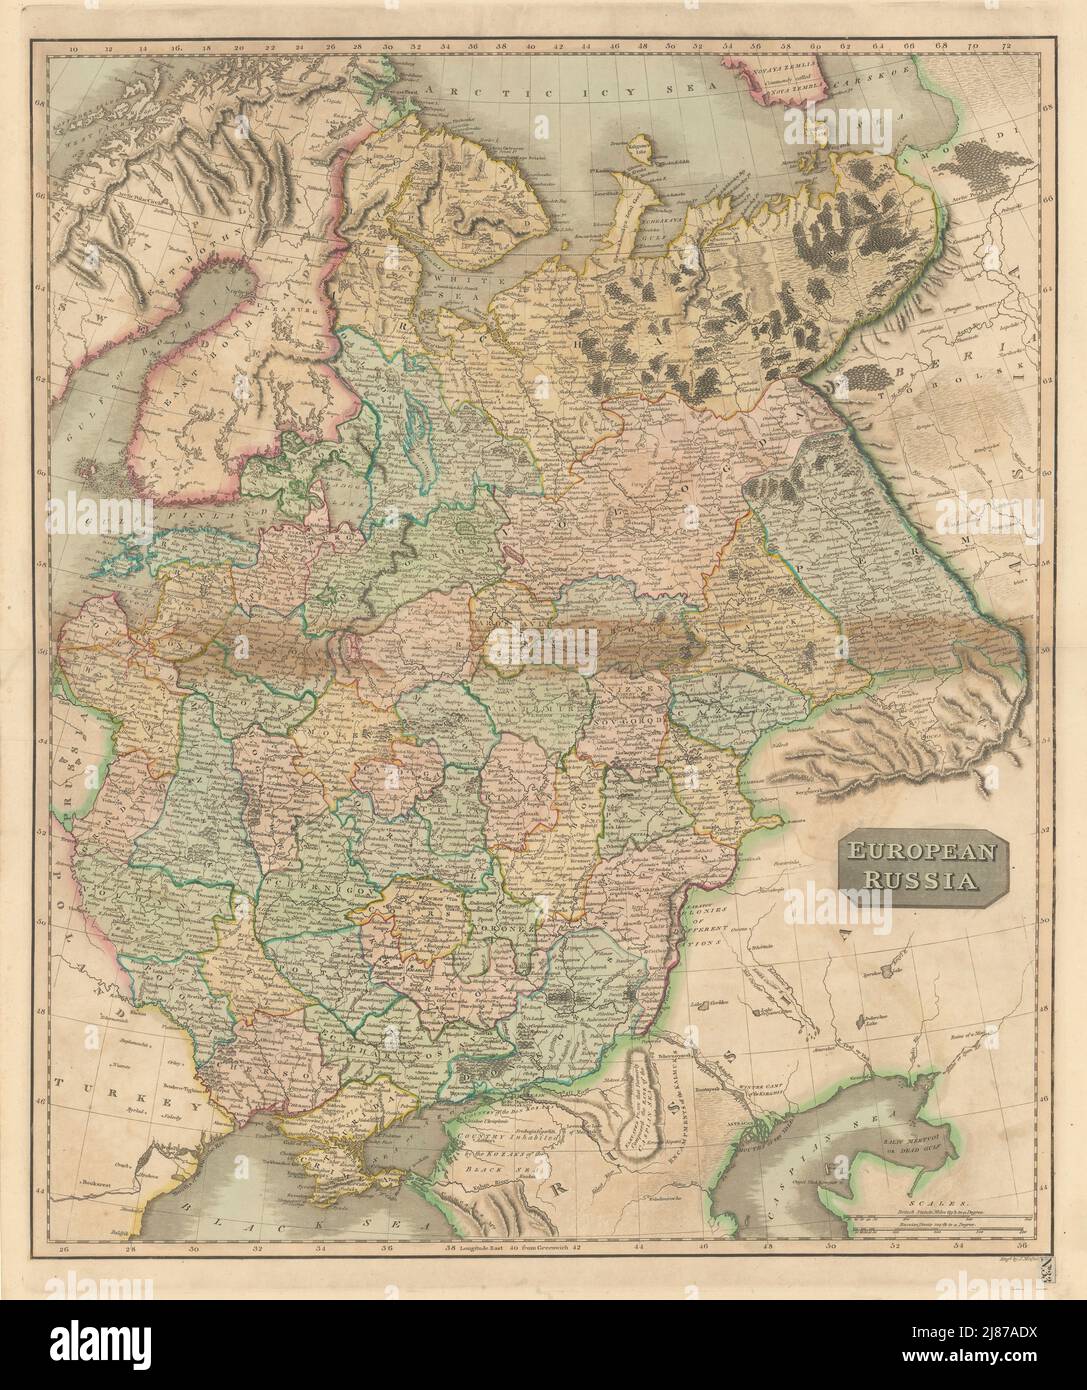 'European Russia' including Baltics Belarus Ukraine. THOMSON 1817 old map Stock Photo